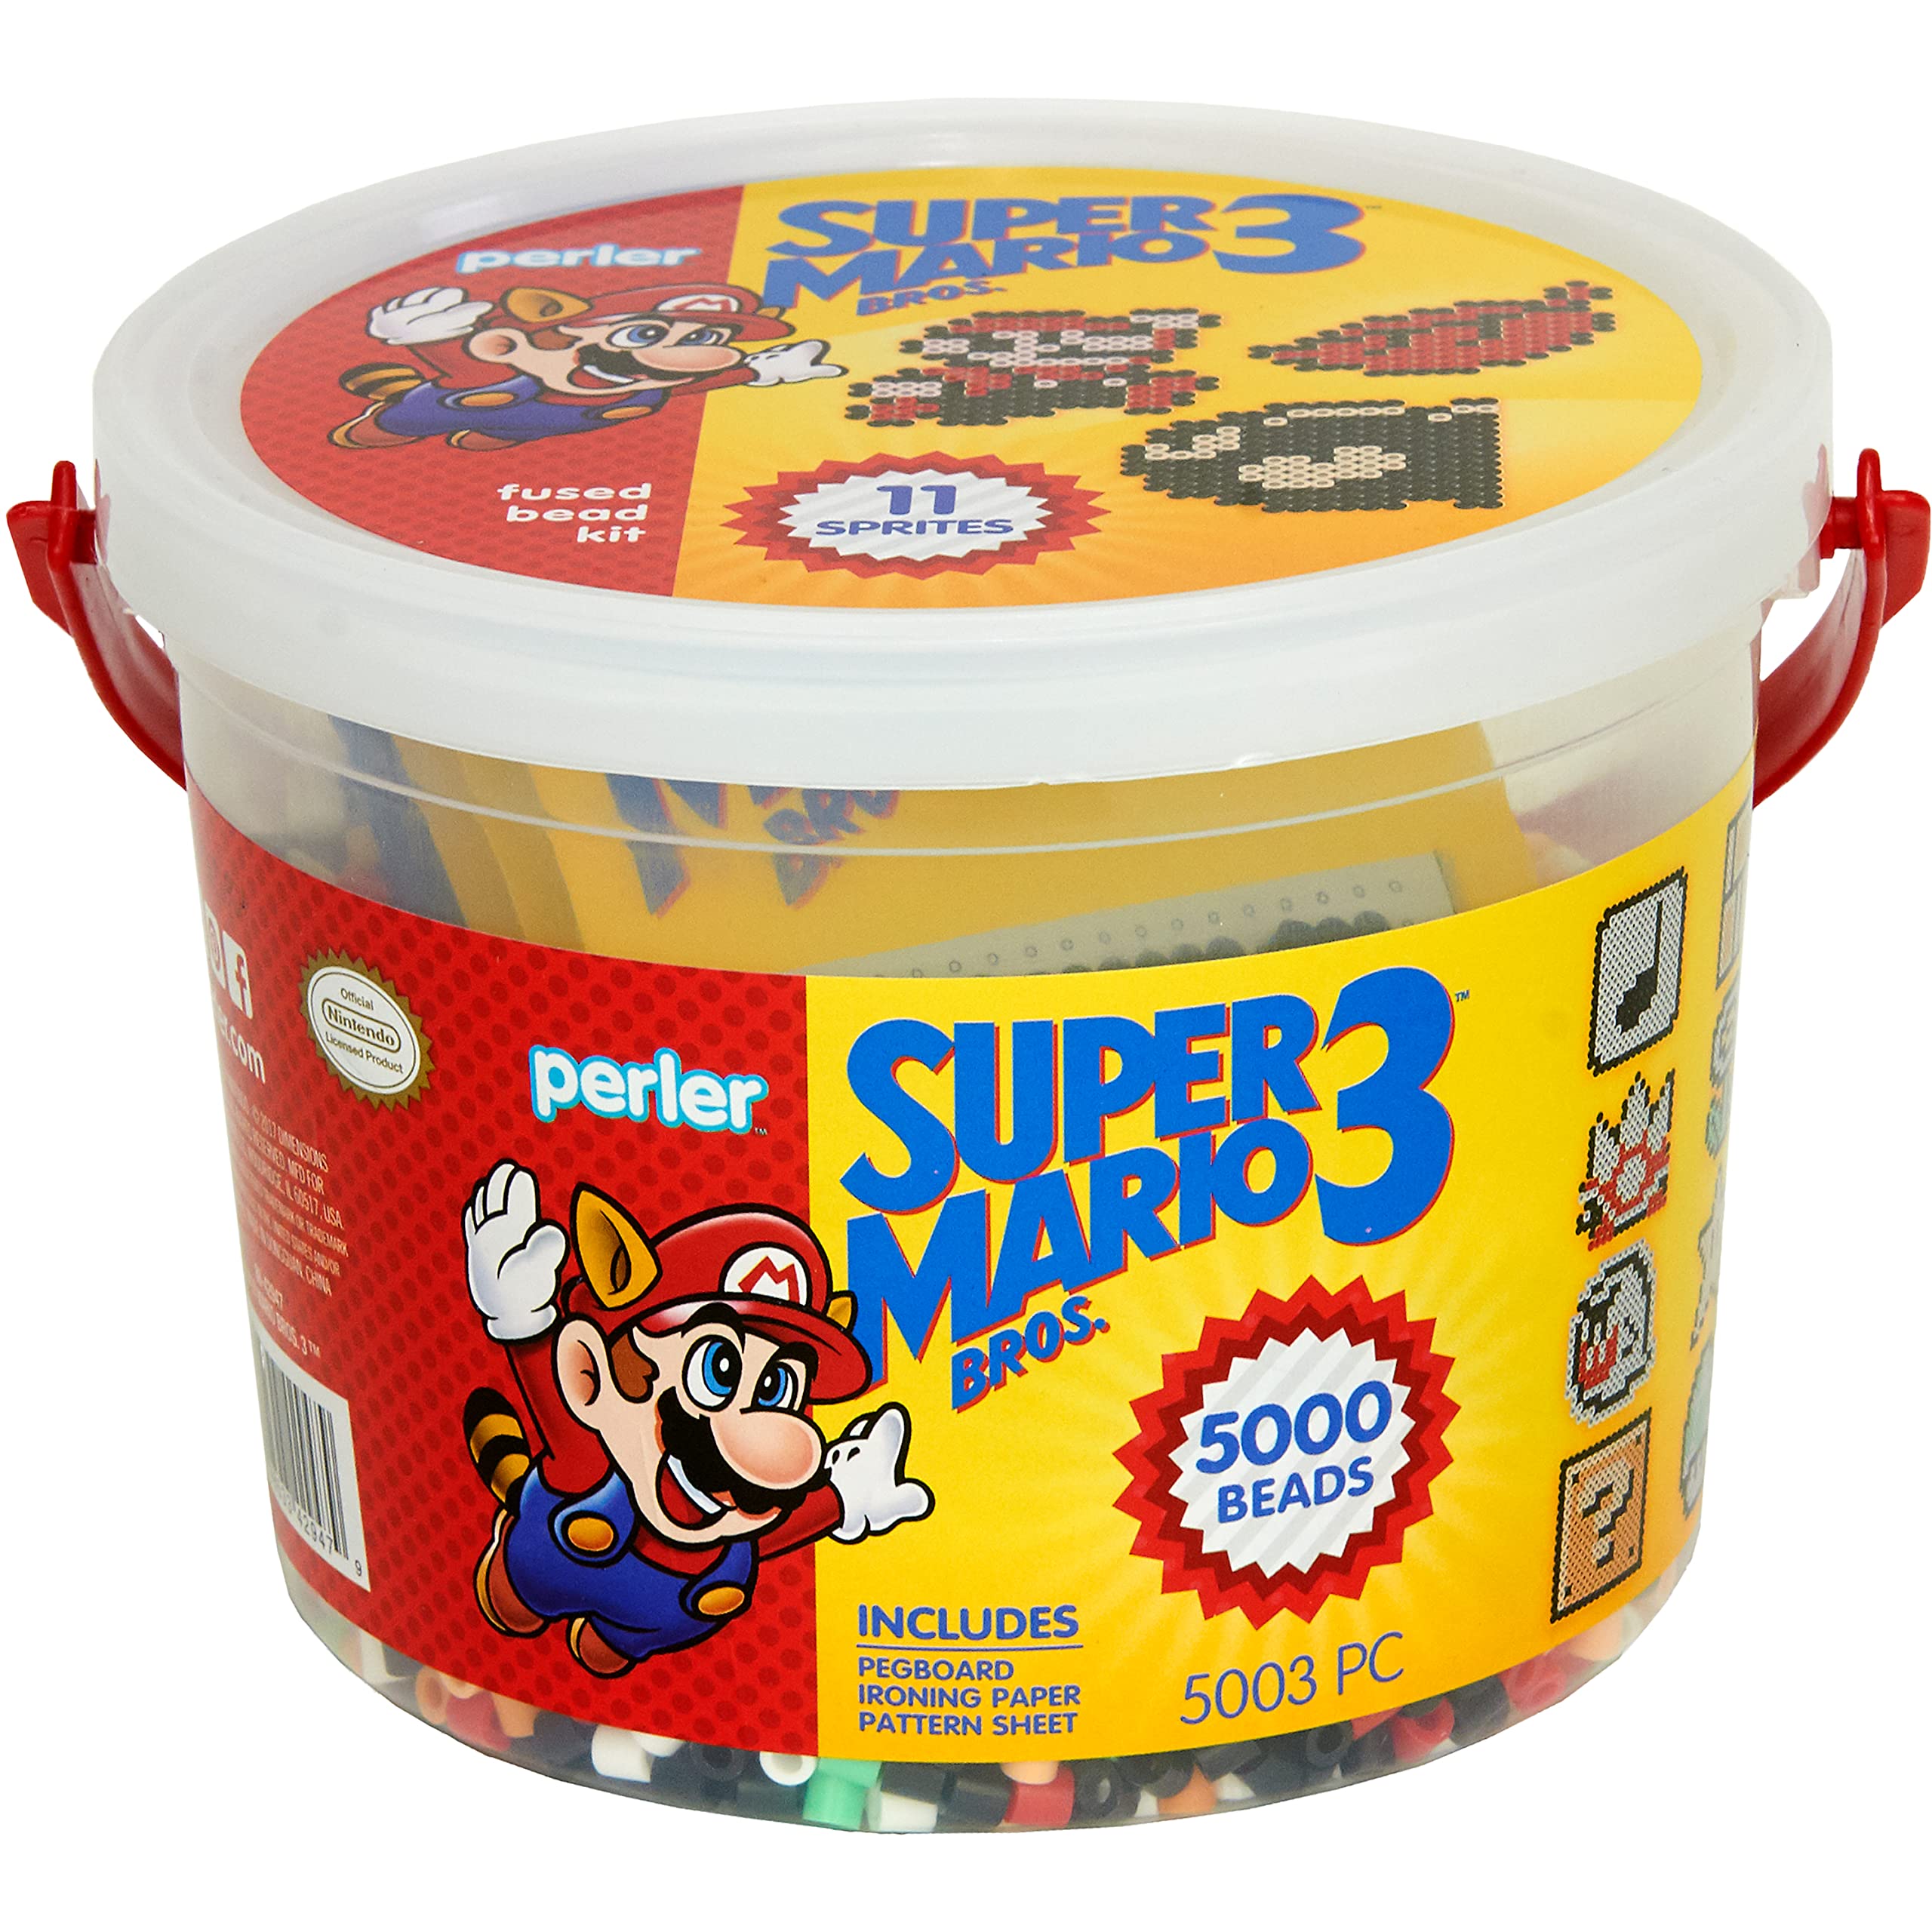 5003-Piece Perler Craft Bead Bucket Activity Kit (Super Mario Bros.) $9.75